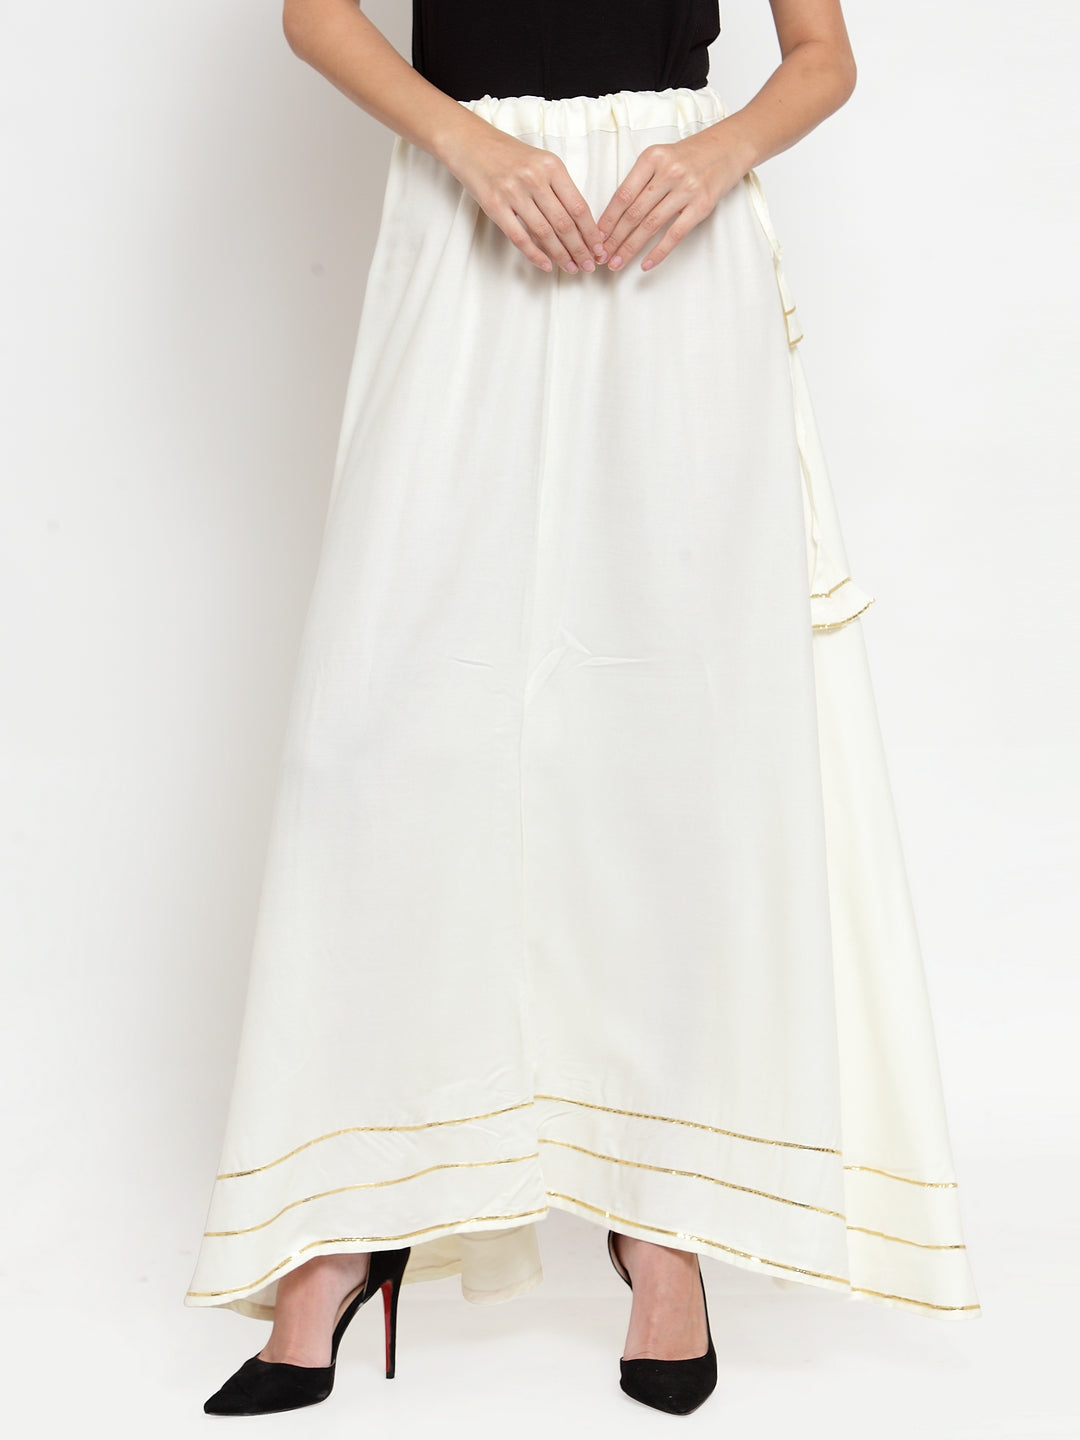 Clora Off-White Gotta Patti Solid Rayon Skirt